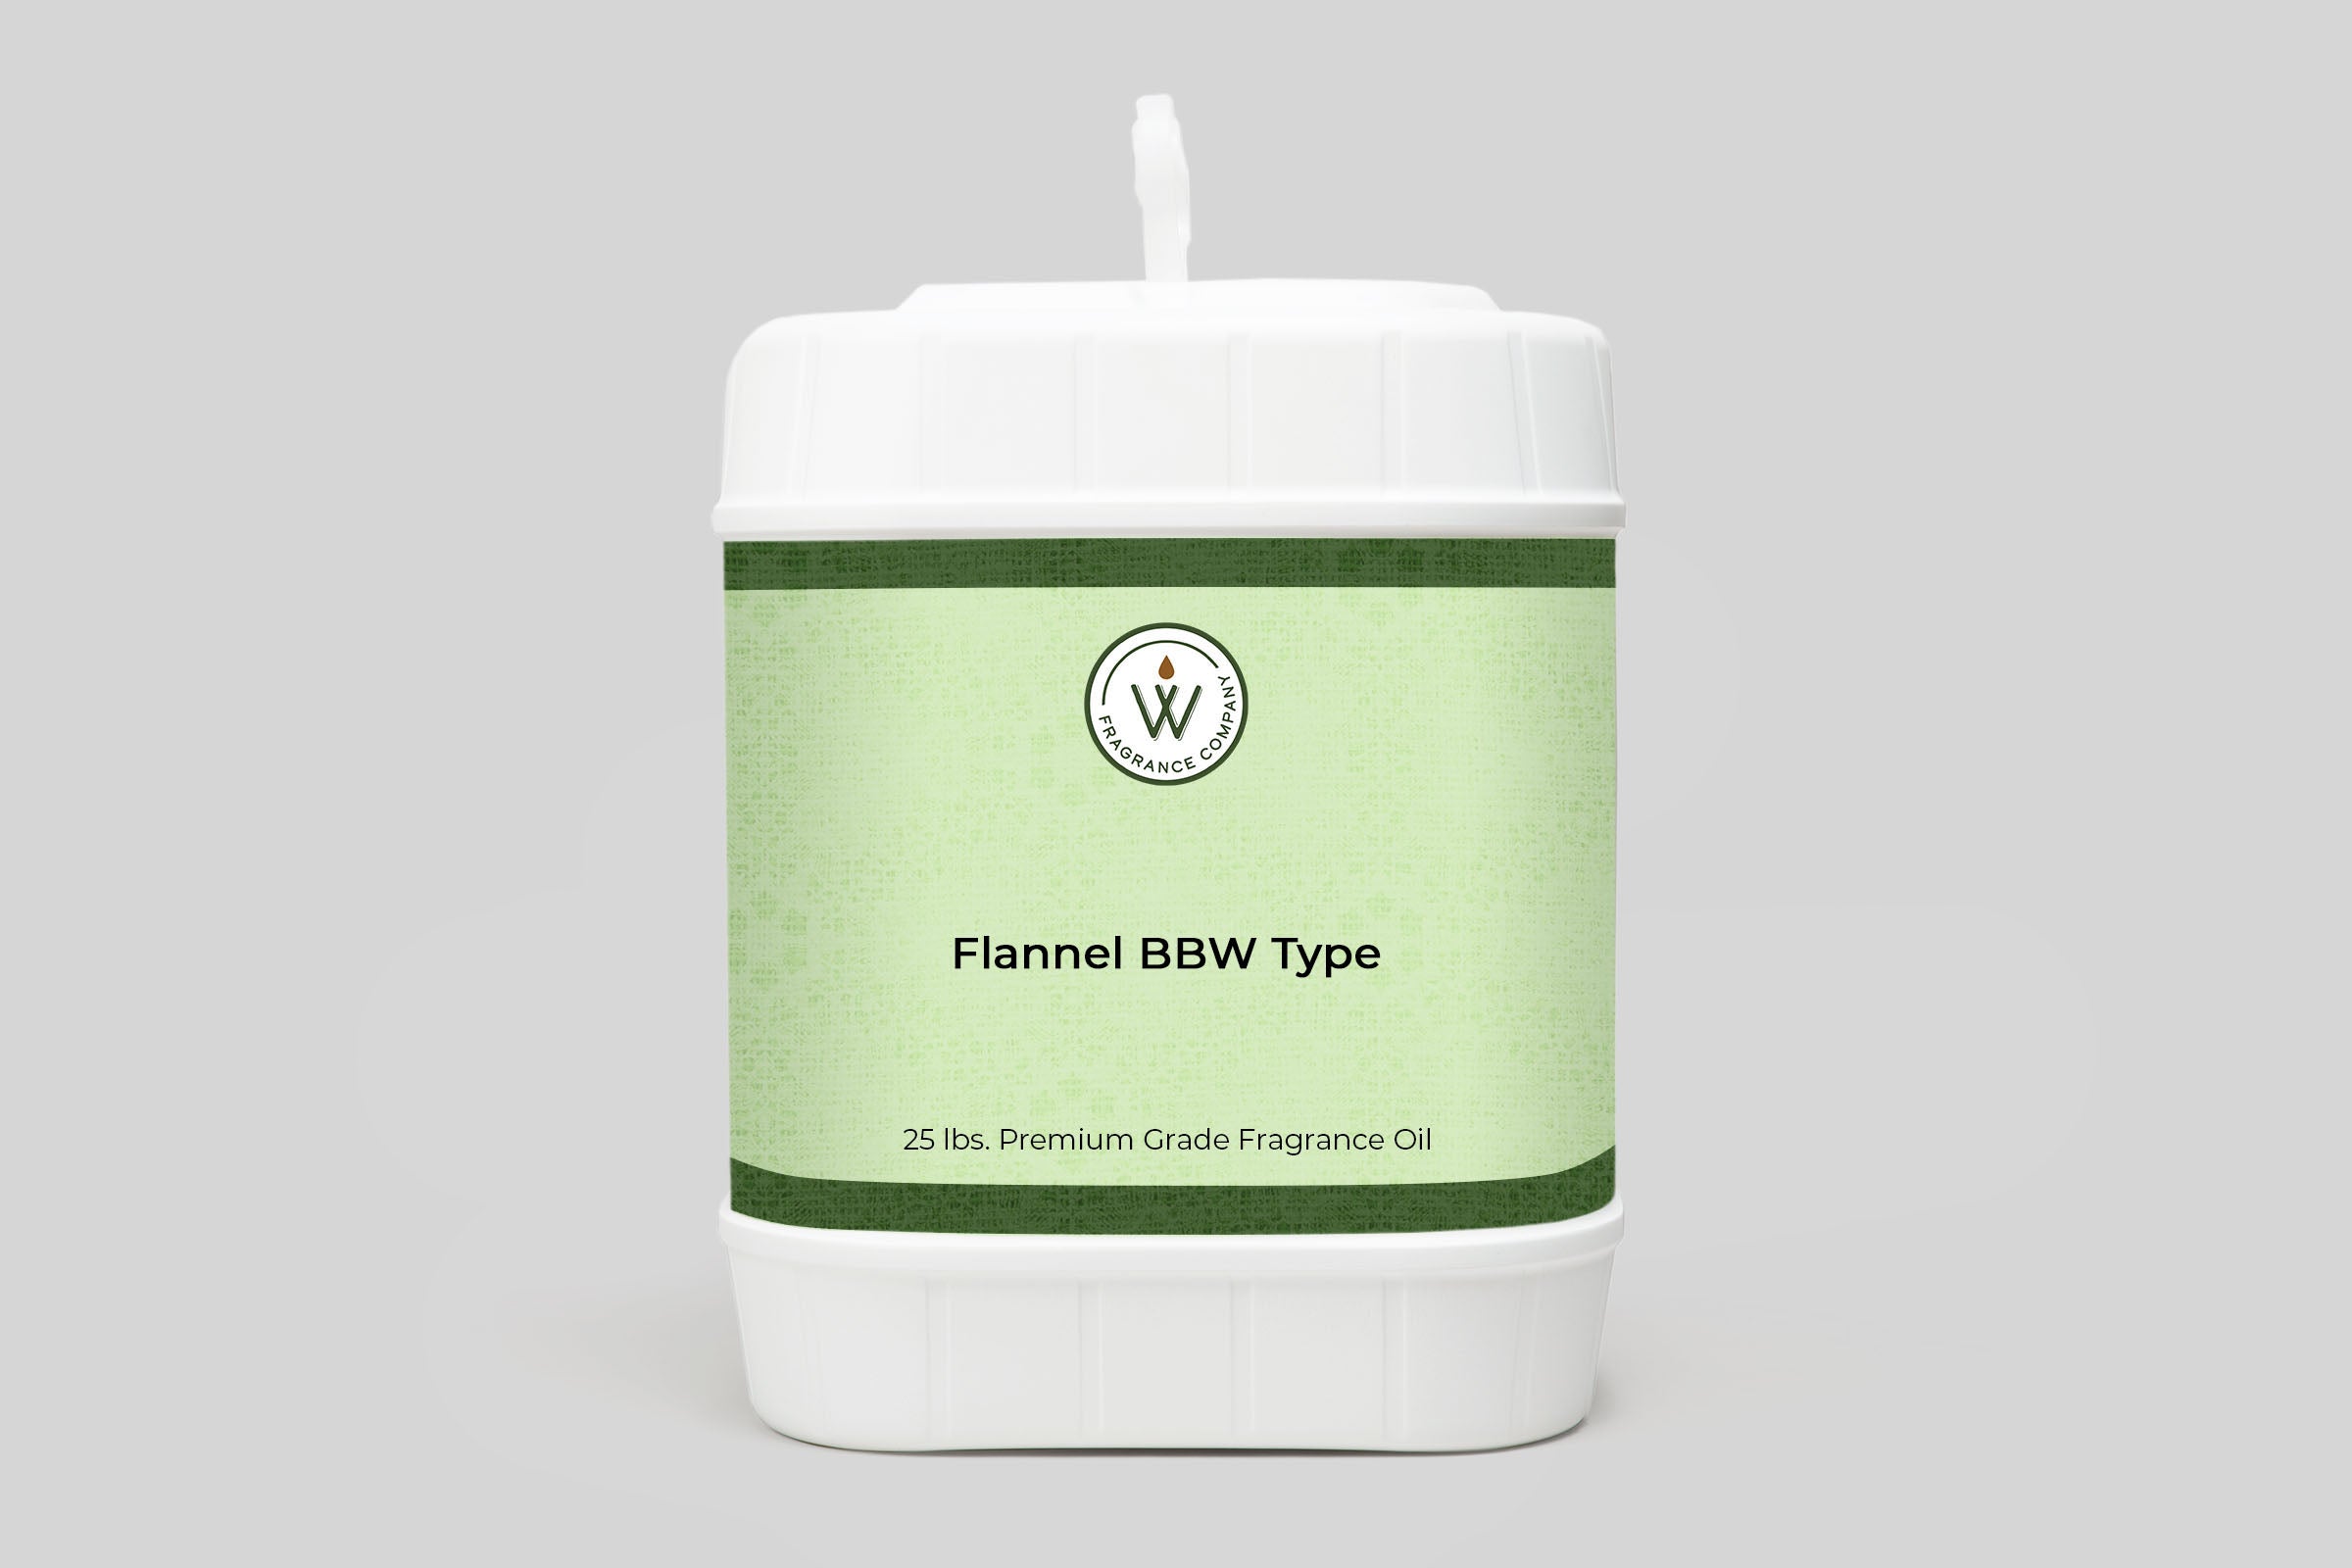 Flannel BBW Type Fragrance Oil